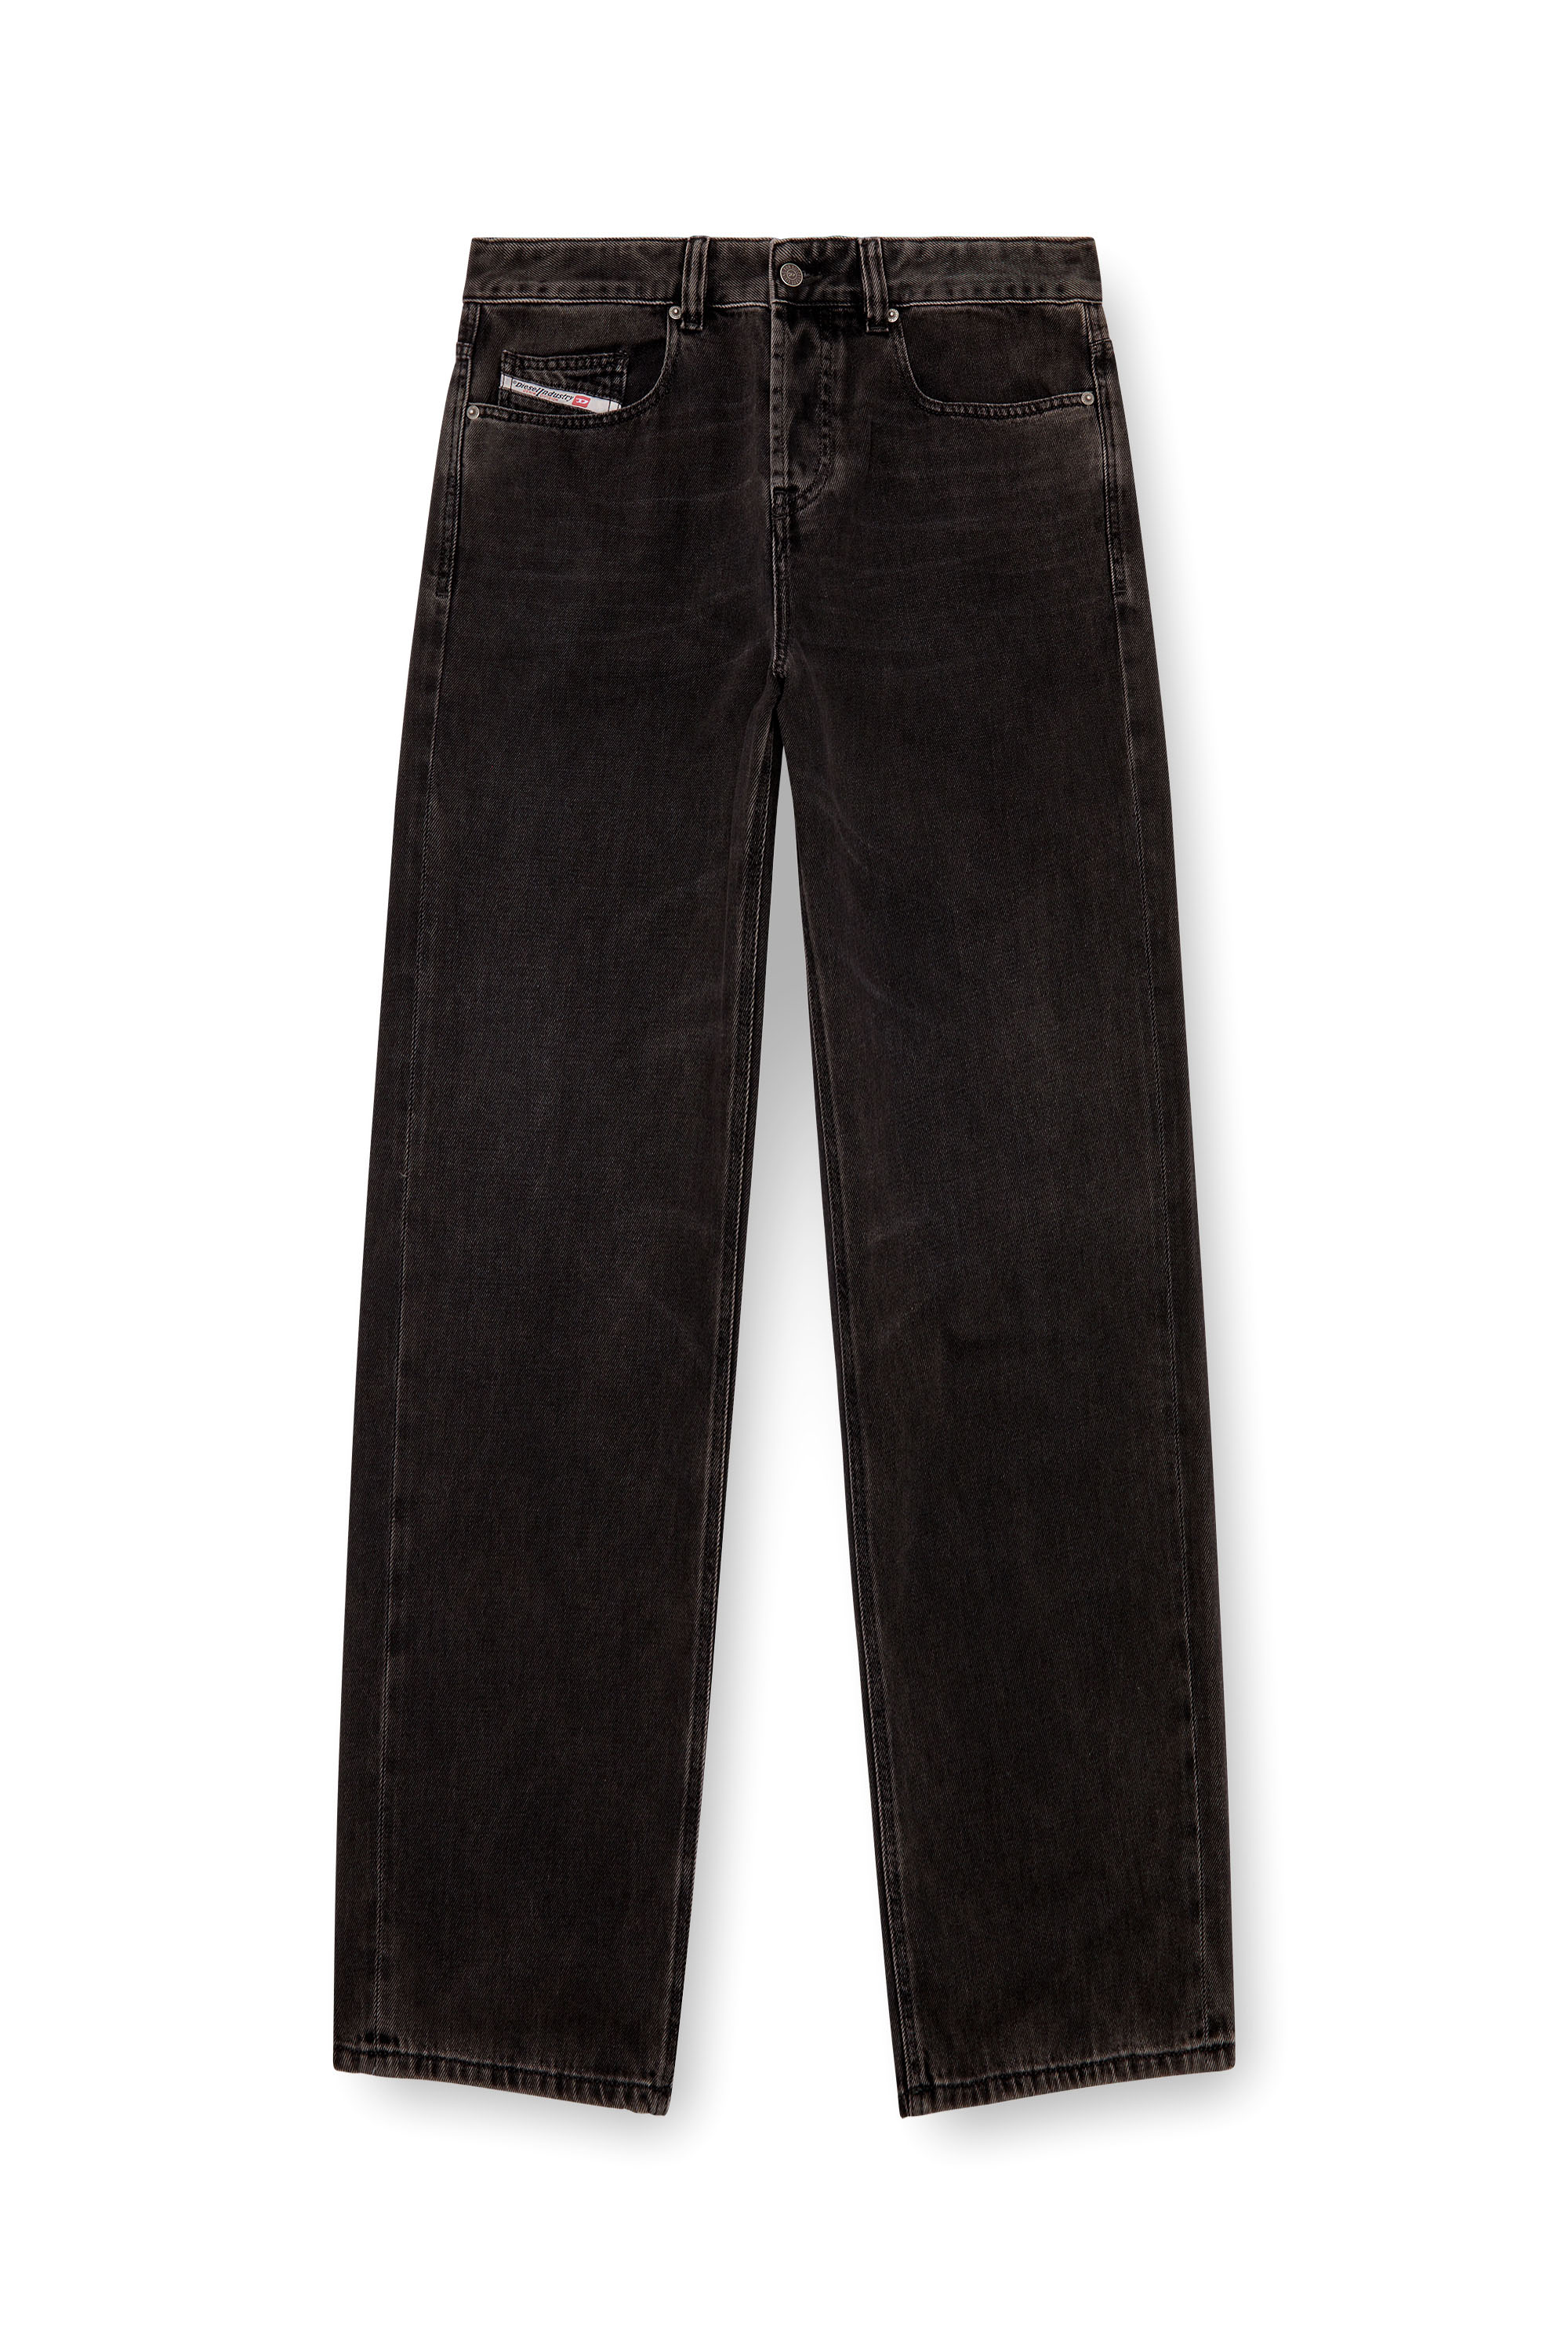 DIESEL Straight Jeans D-Rise denim 09e25股上33cm - デニム/ジーンズ